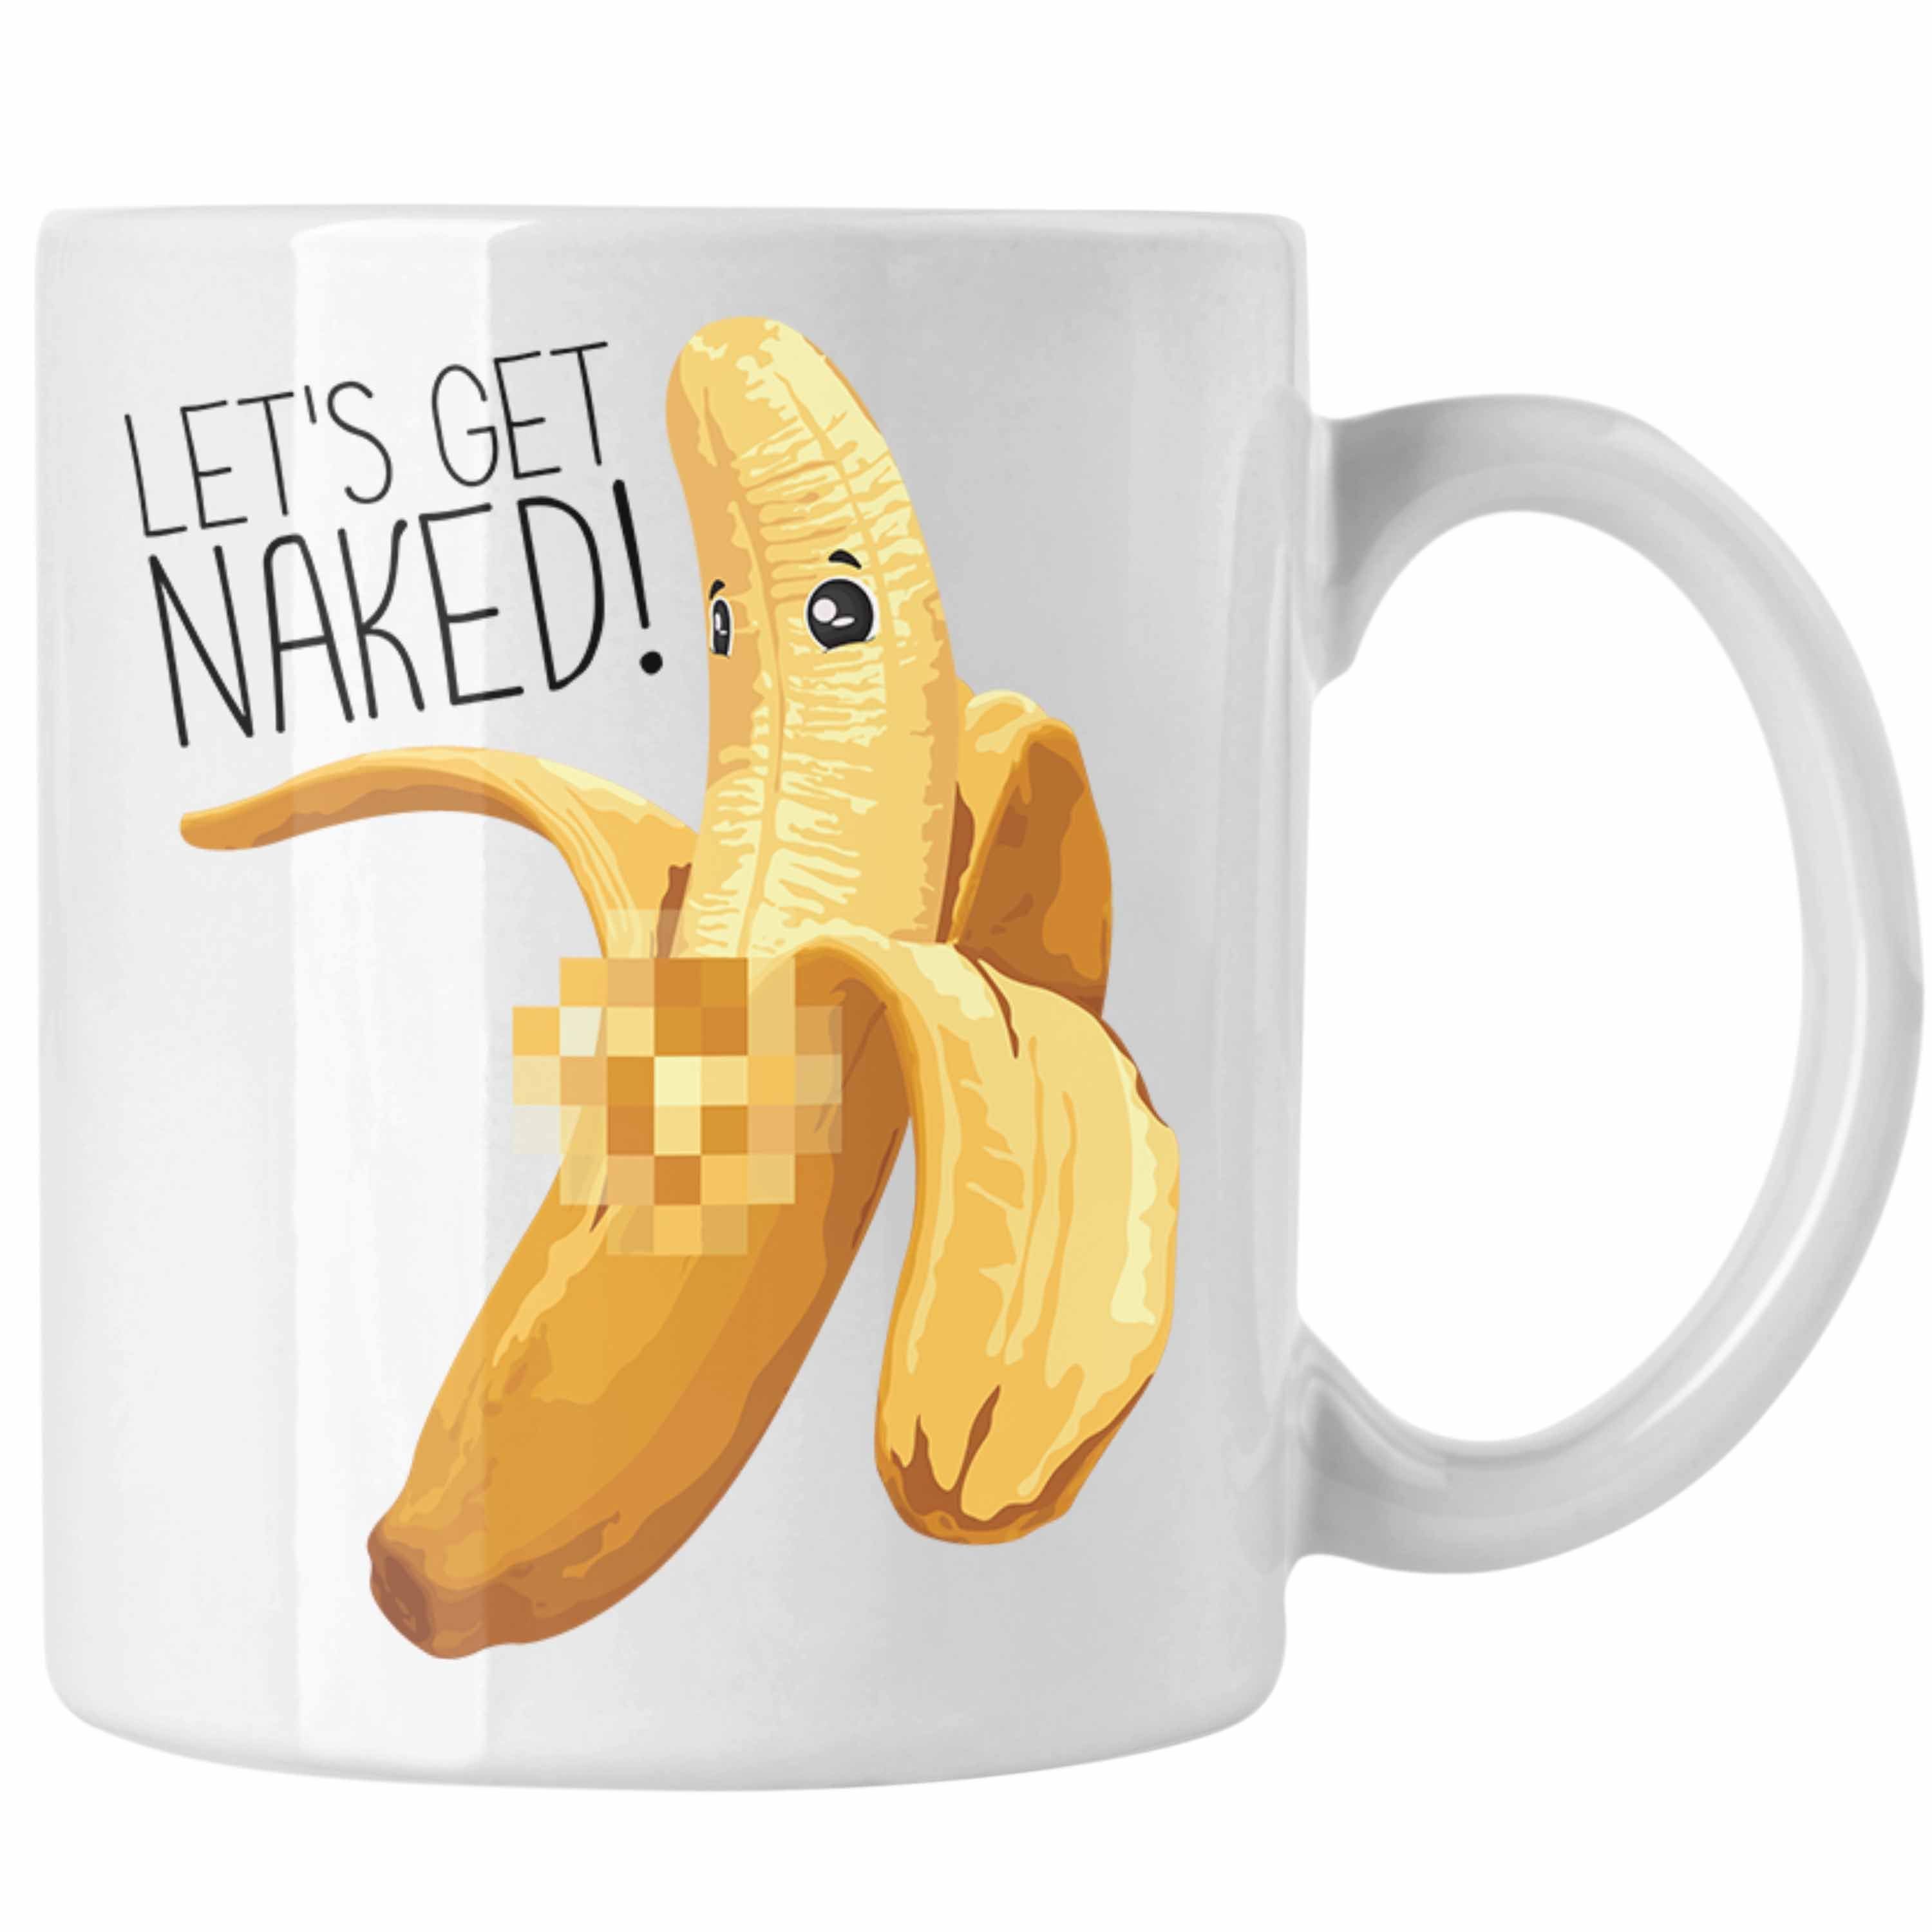 Trendation Tasse Banane Striptease Naked Lets Bech Tasse Weiss Erwachsener Get Humor Geschenk